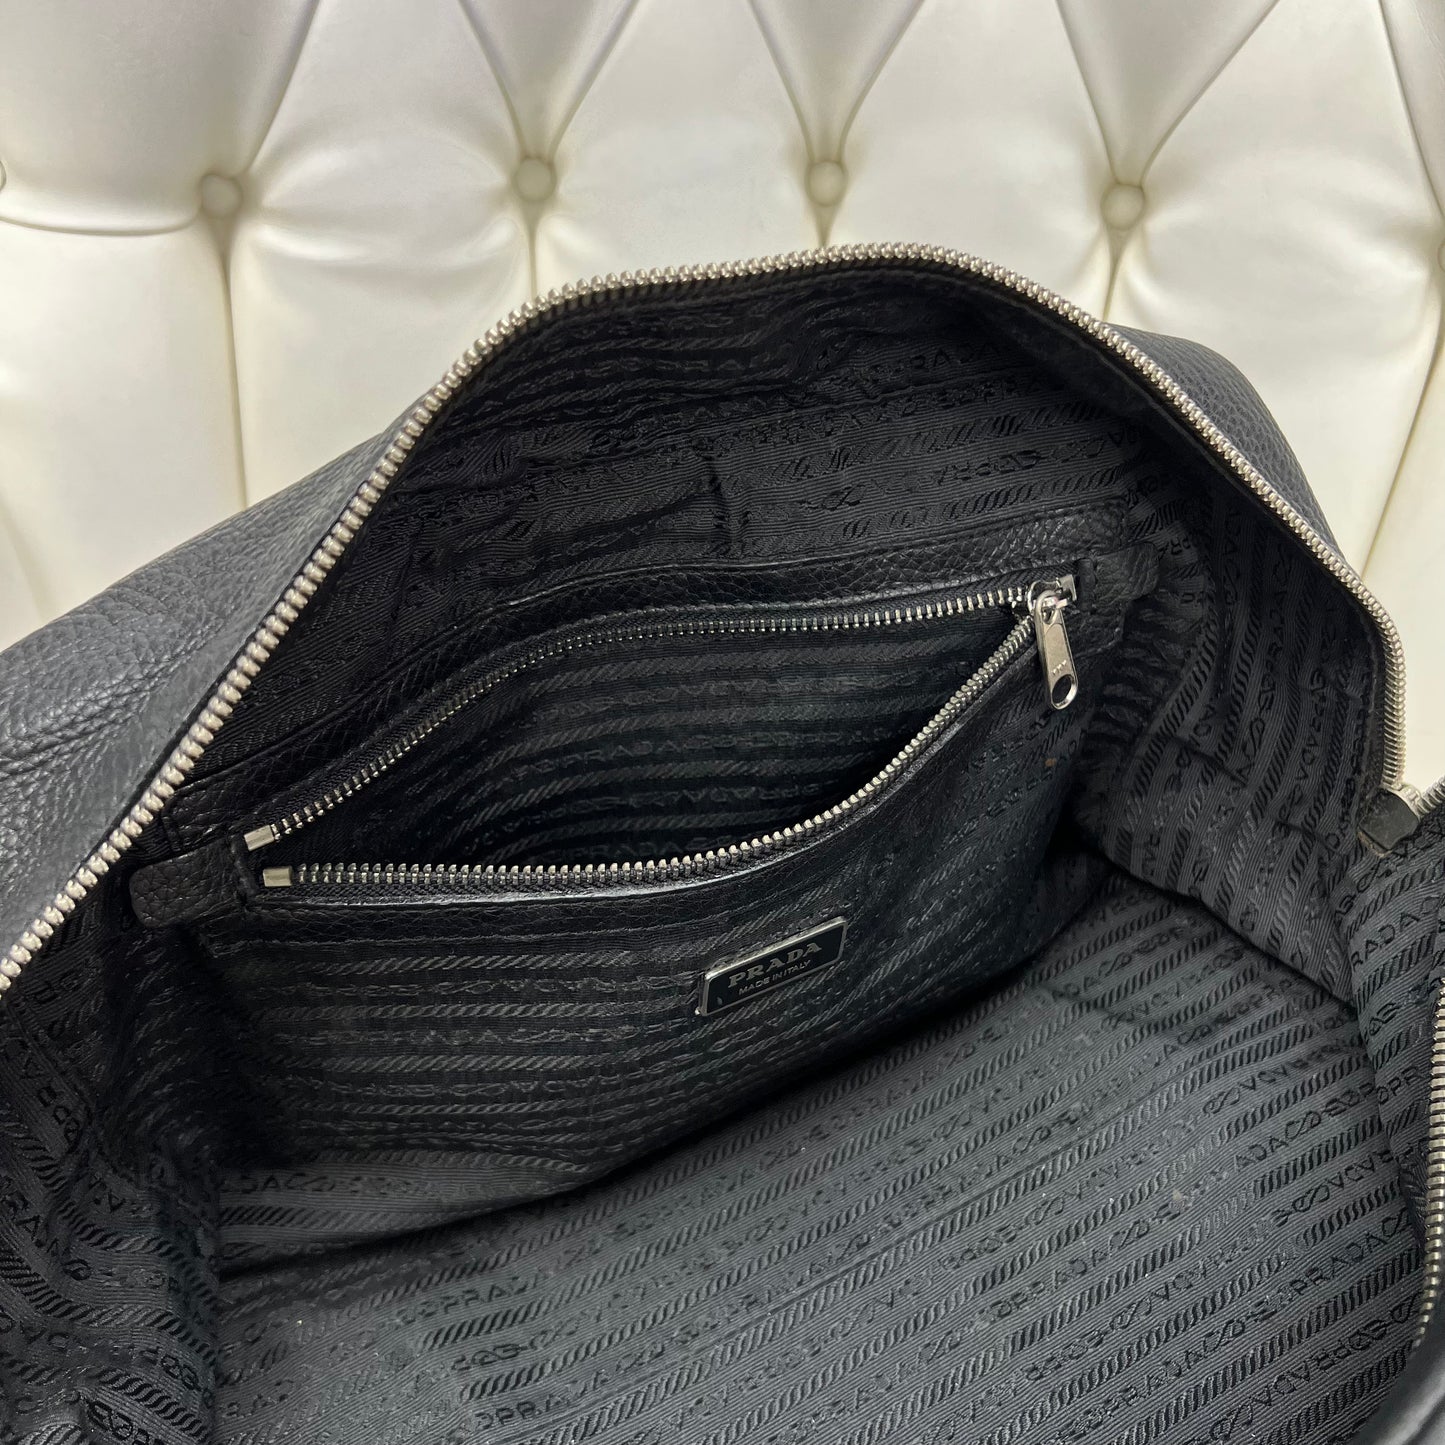 Prada Vintage Leather Bowler Bag